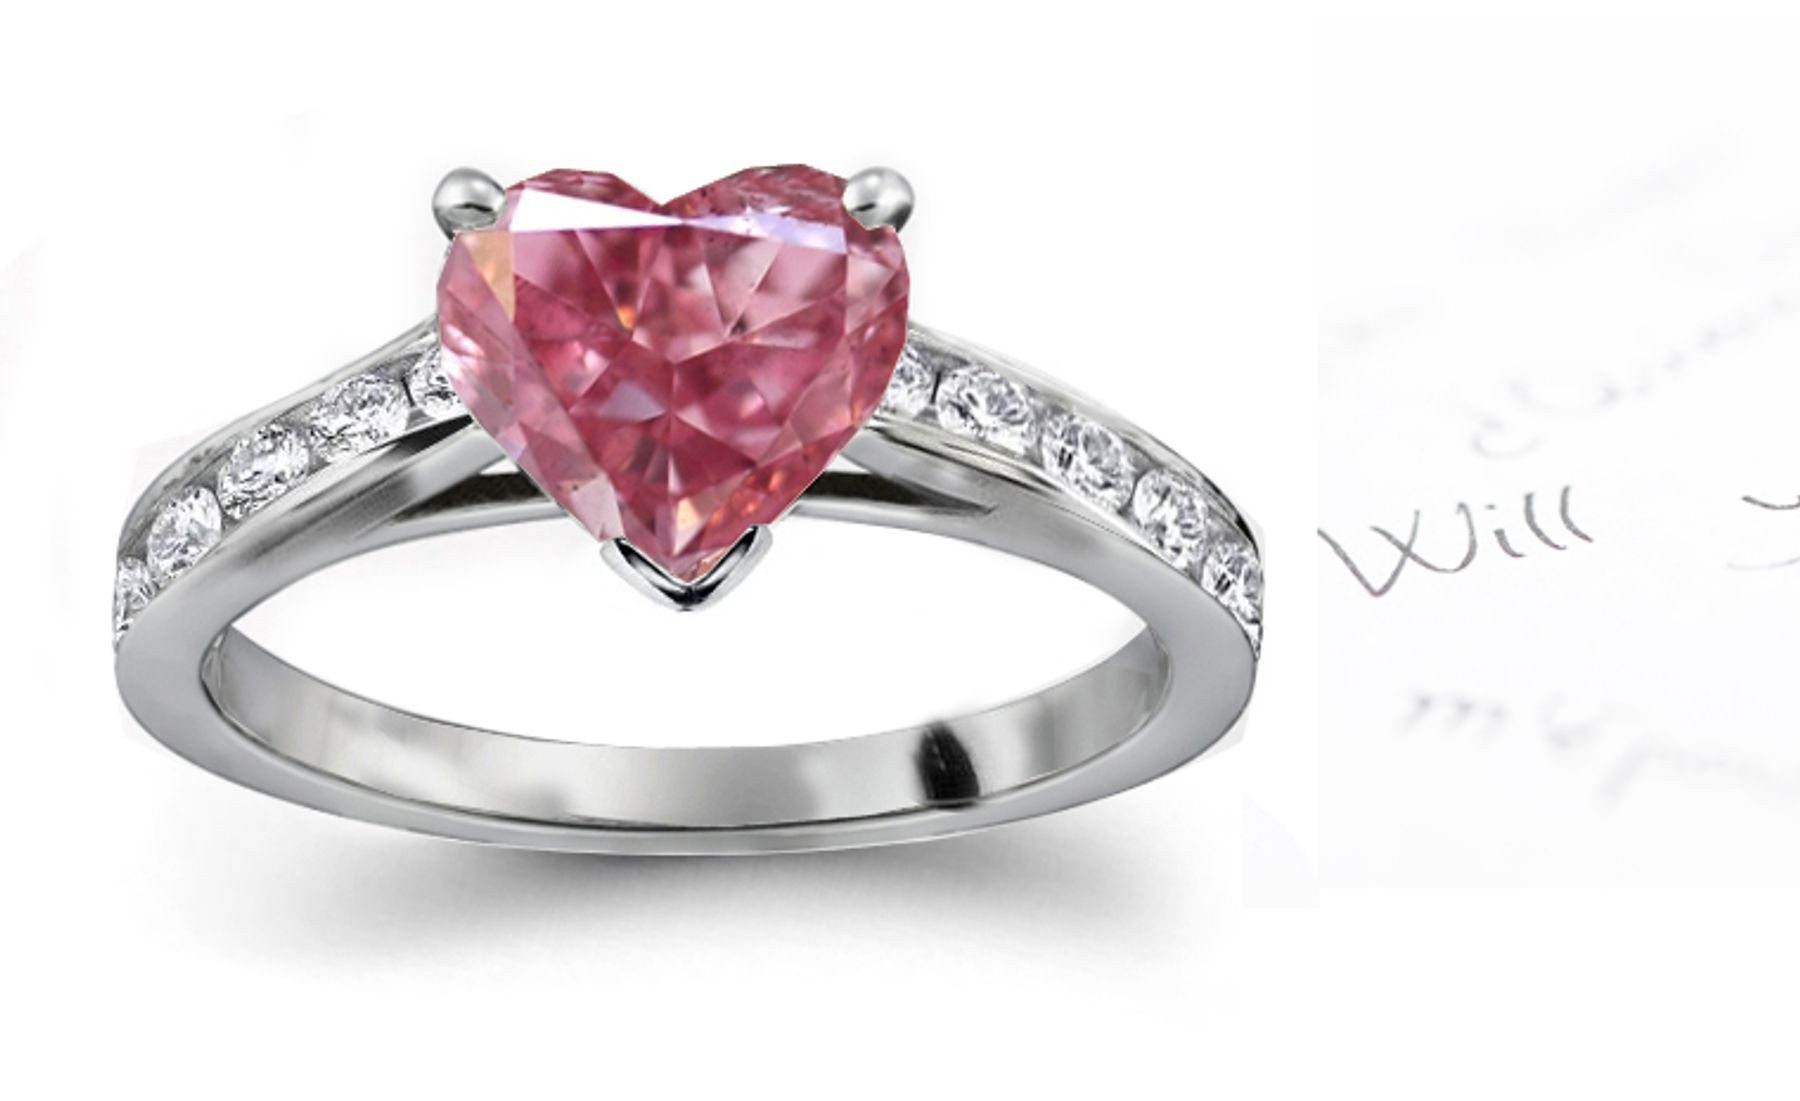 Glorious Center Heart Pink Diamond & Channel Set White Diamonds White Gold Engagement Ring